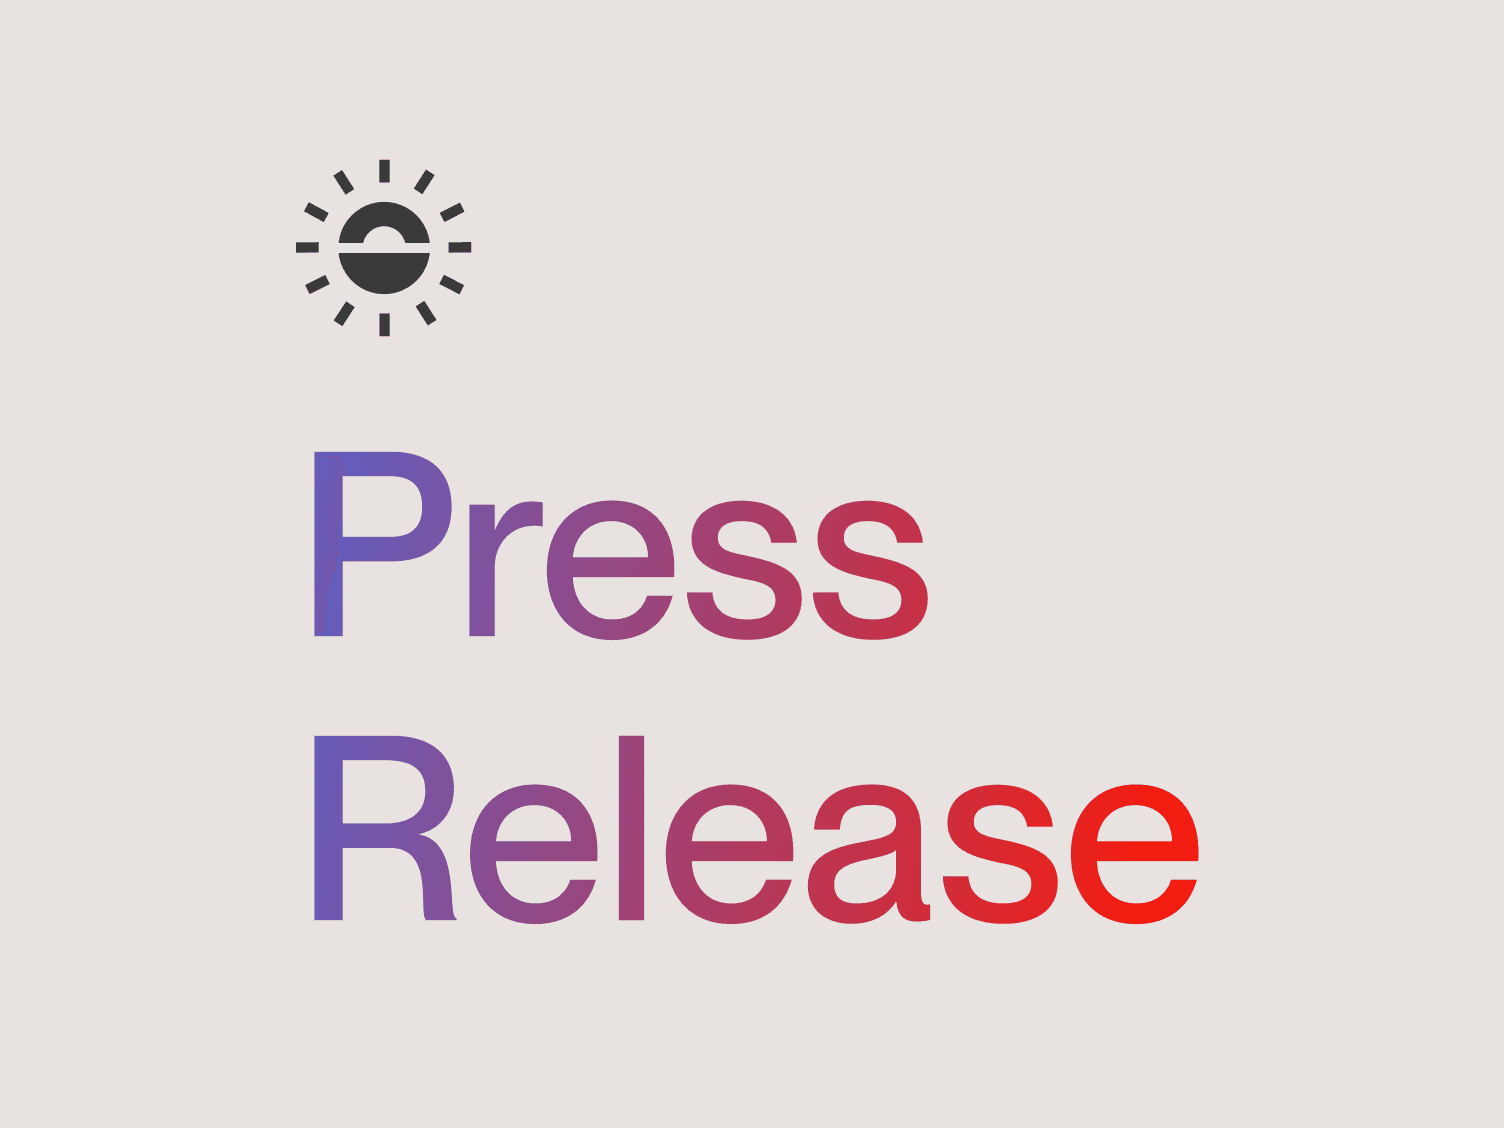 Primasun Press Release image featuring the Primasun logo